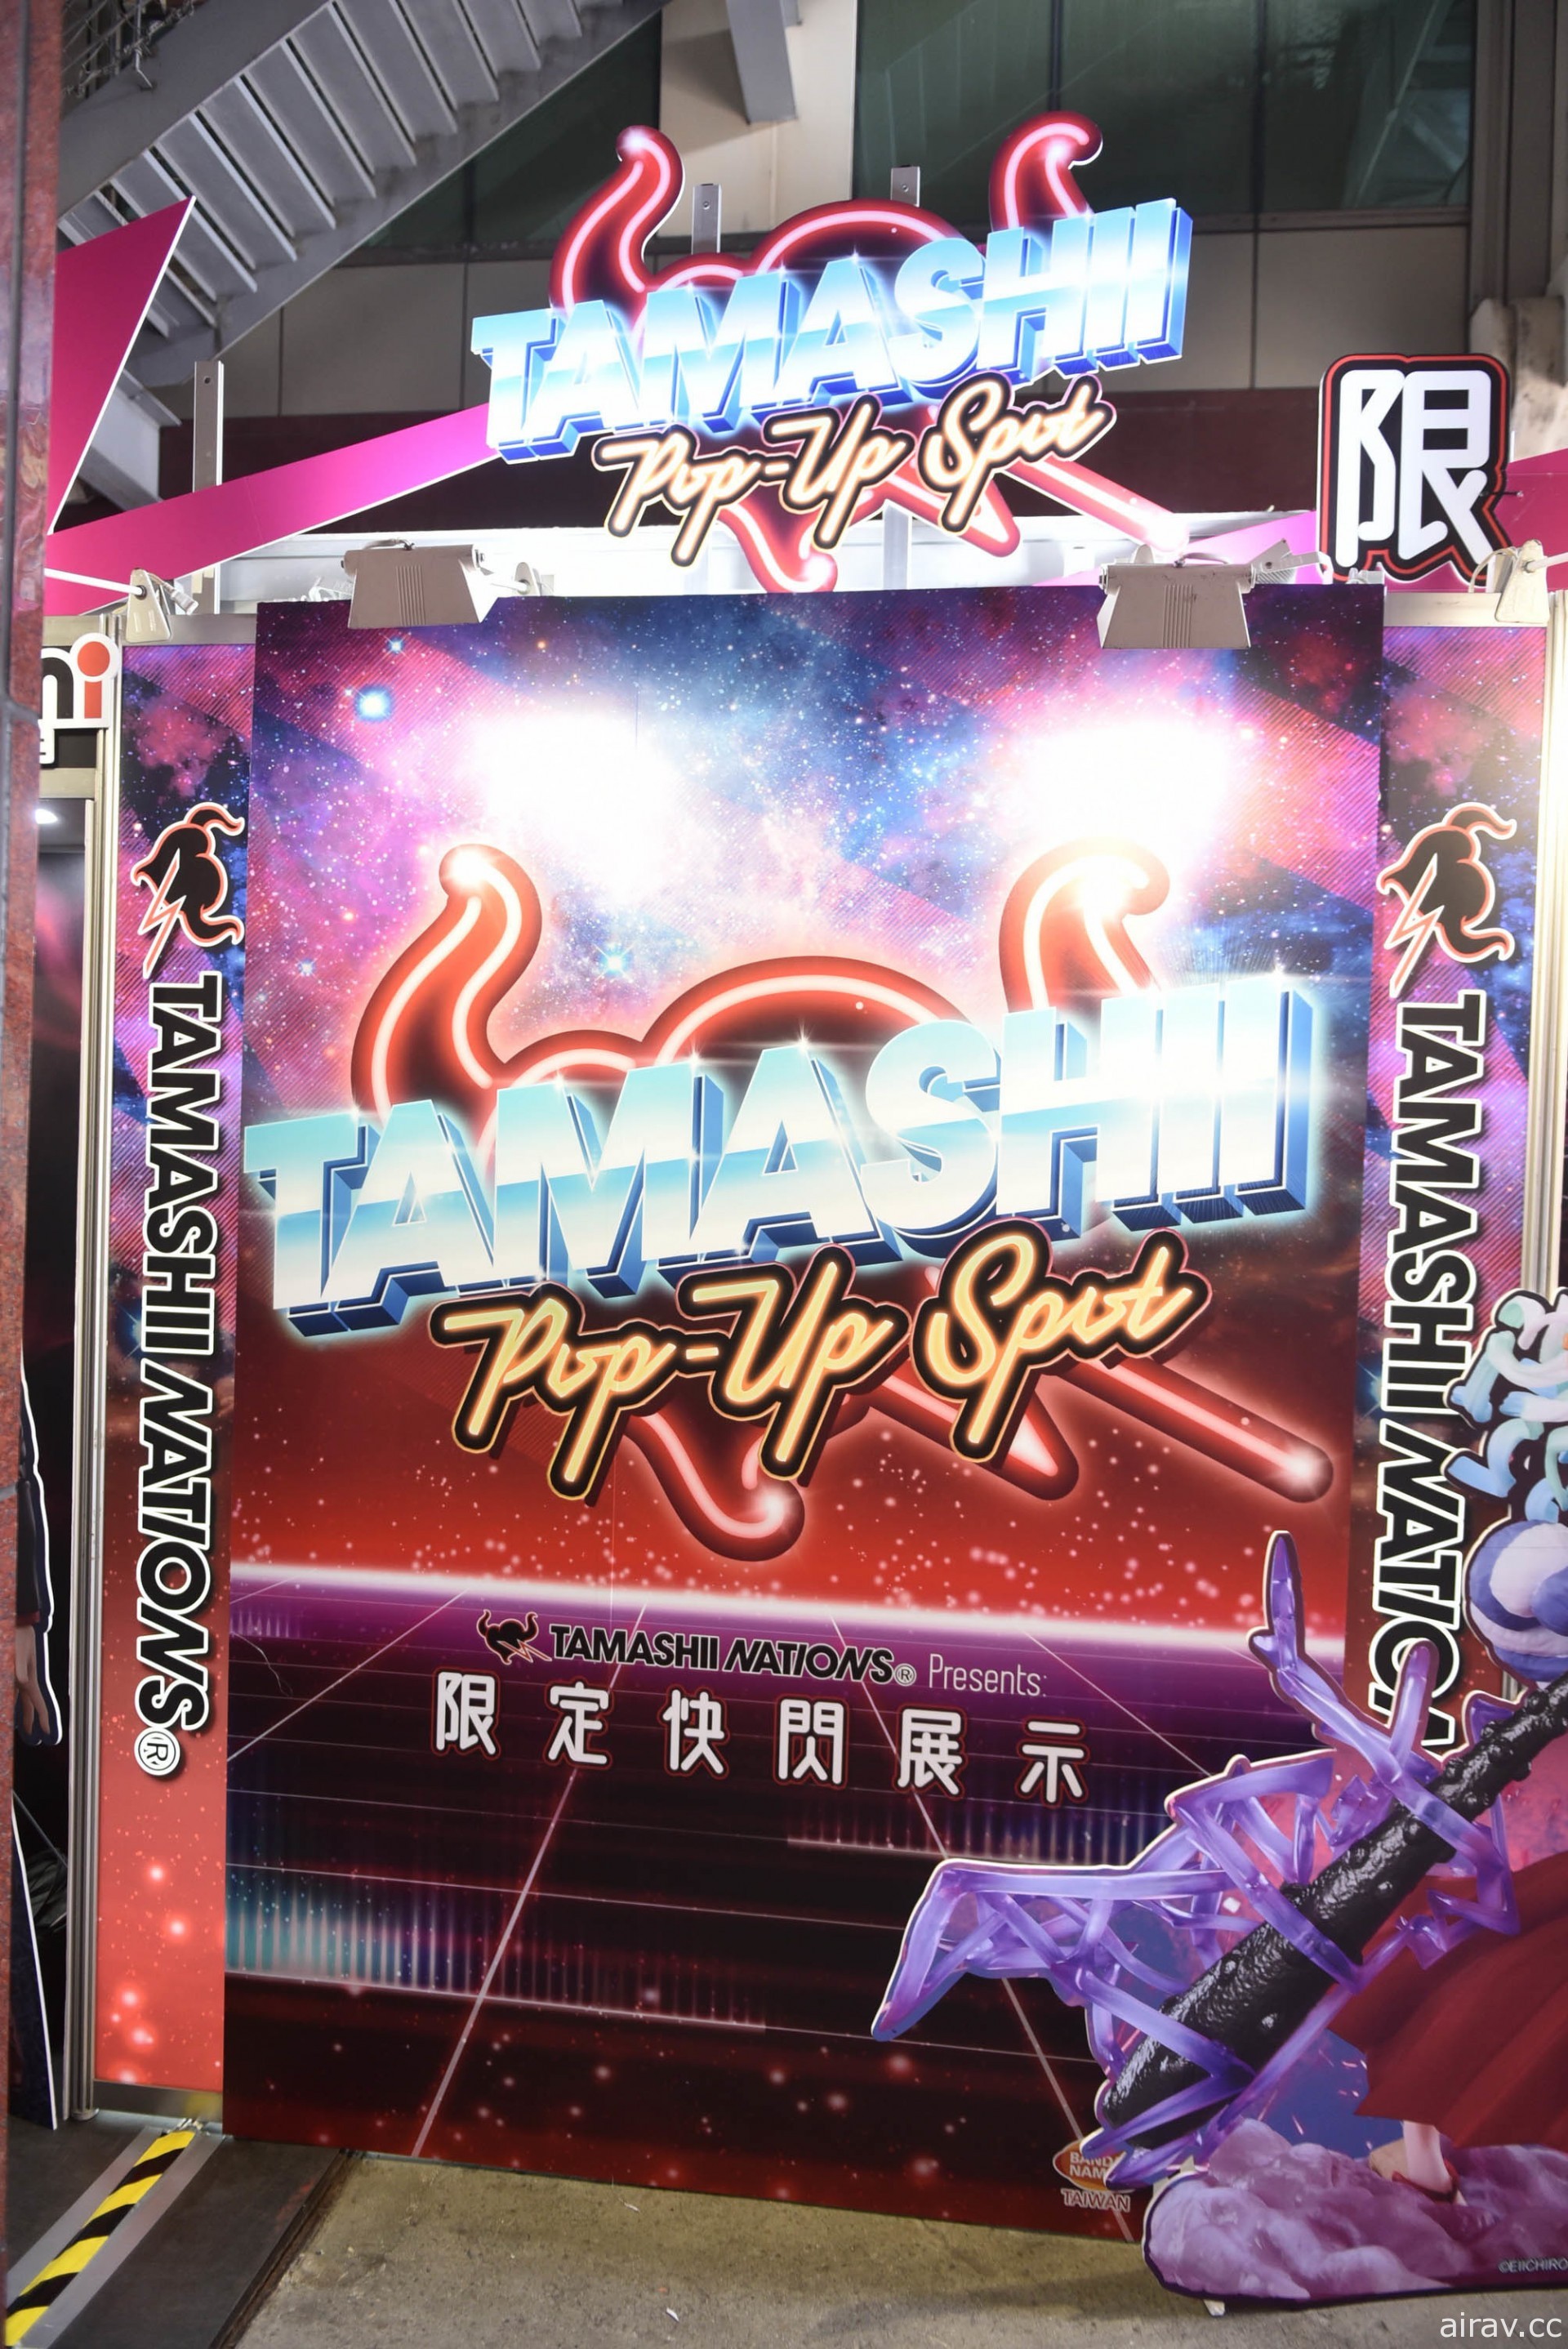 “TAMASHII POP UP SPOT 限定快闪展示”为期三日于台中登场